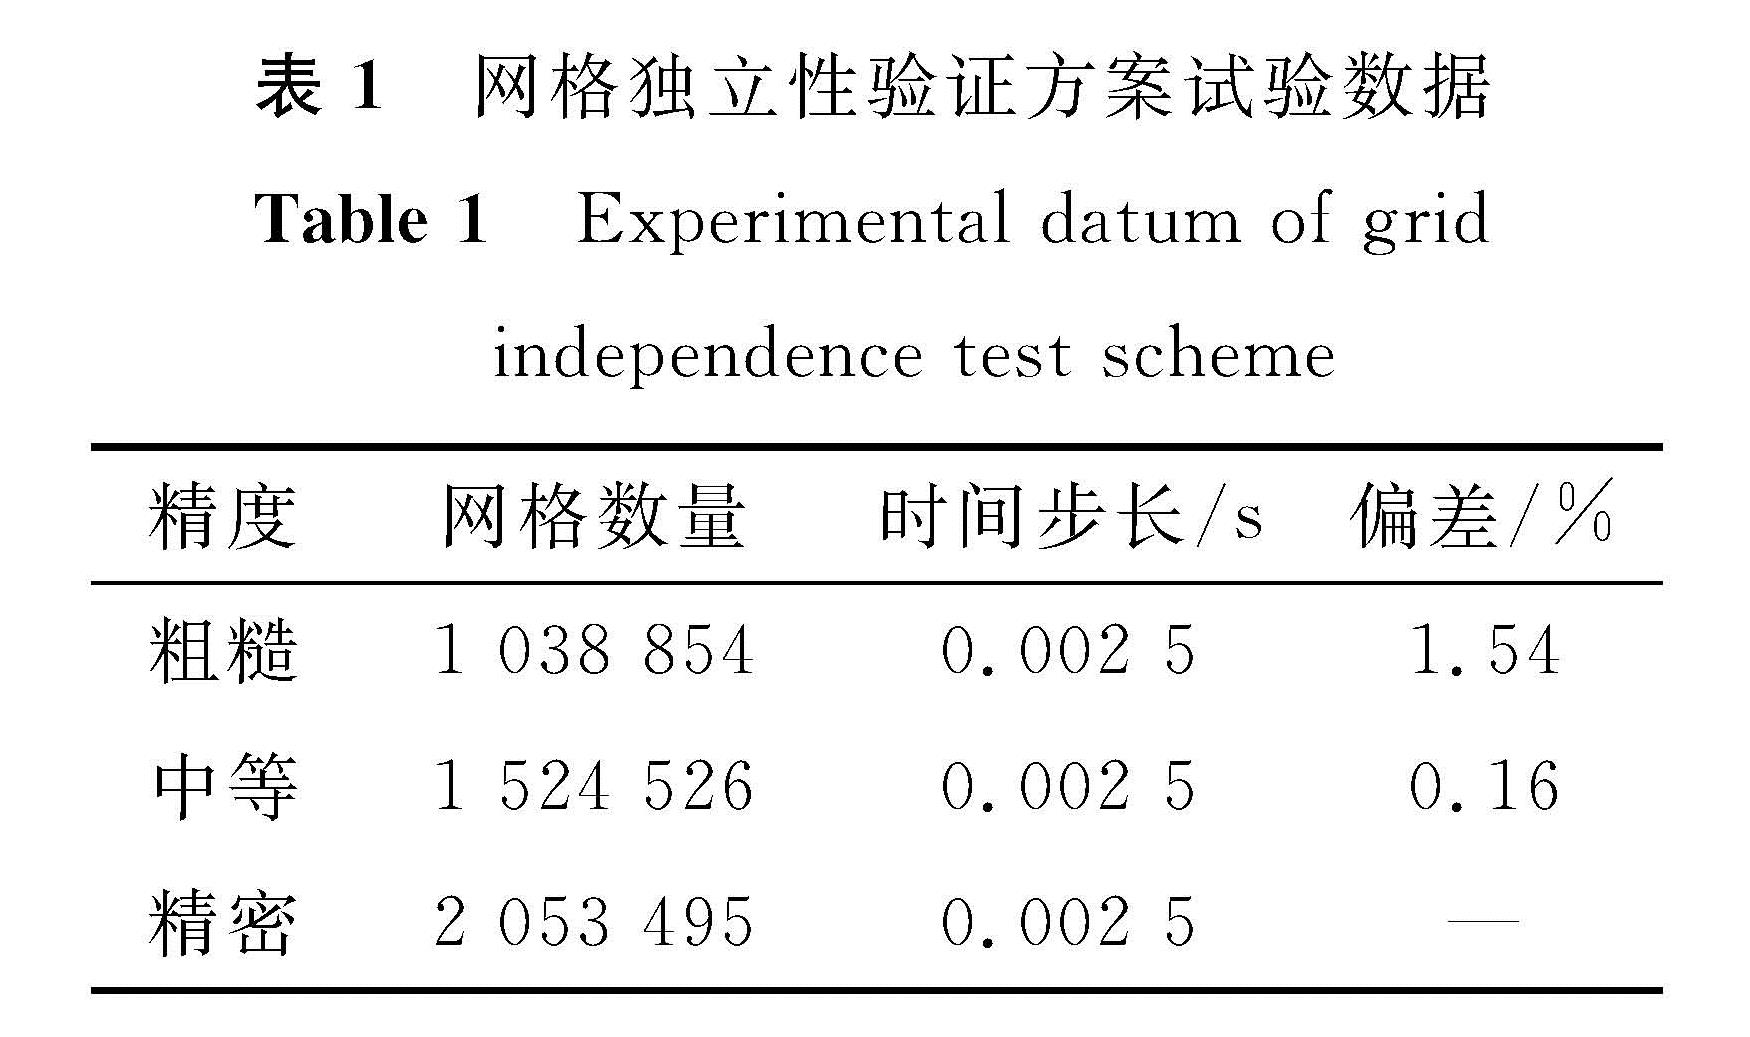 表1 网格独立性验证方案试验数据<br/>Table 1 Experimental datum of grid independence test scheme